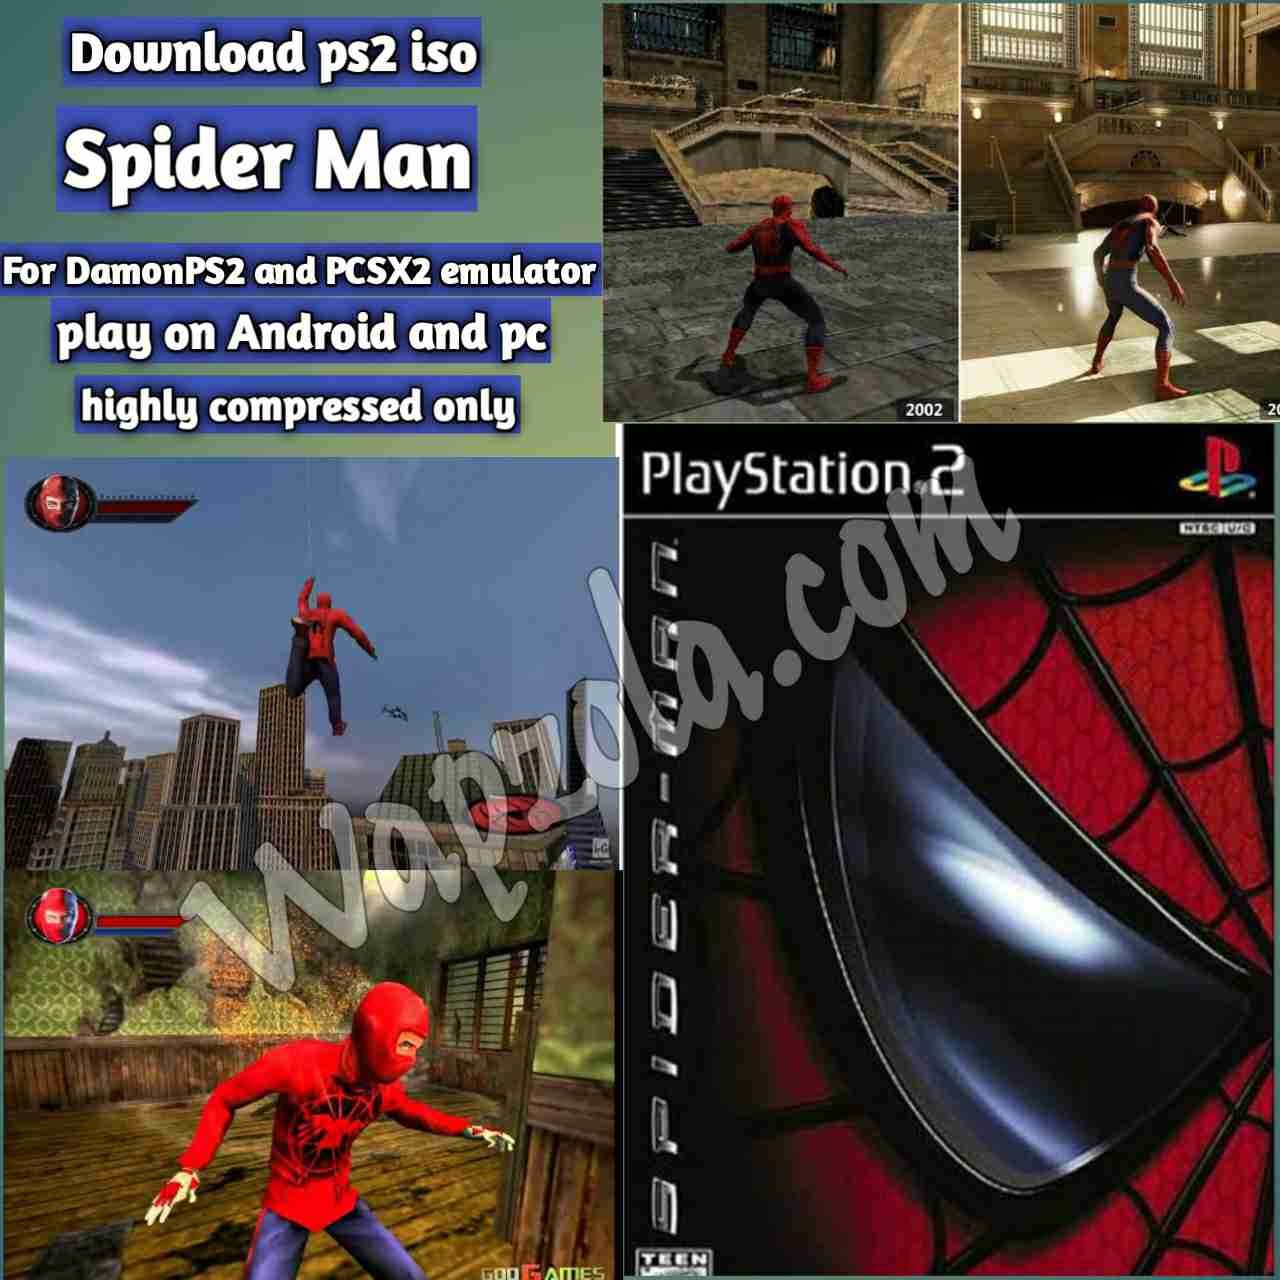 spider-man-iso-ps2-emulator-damonps2-pcsx2-playstation-2